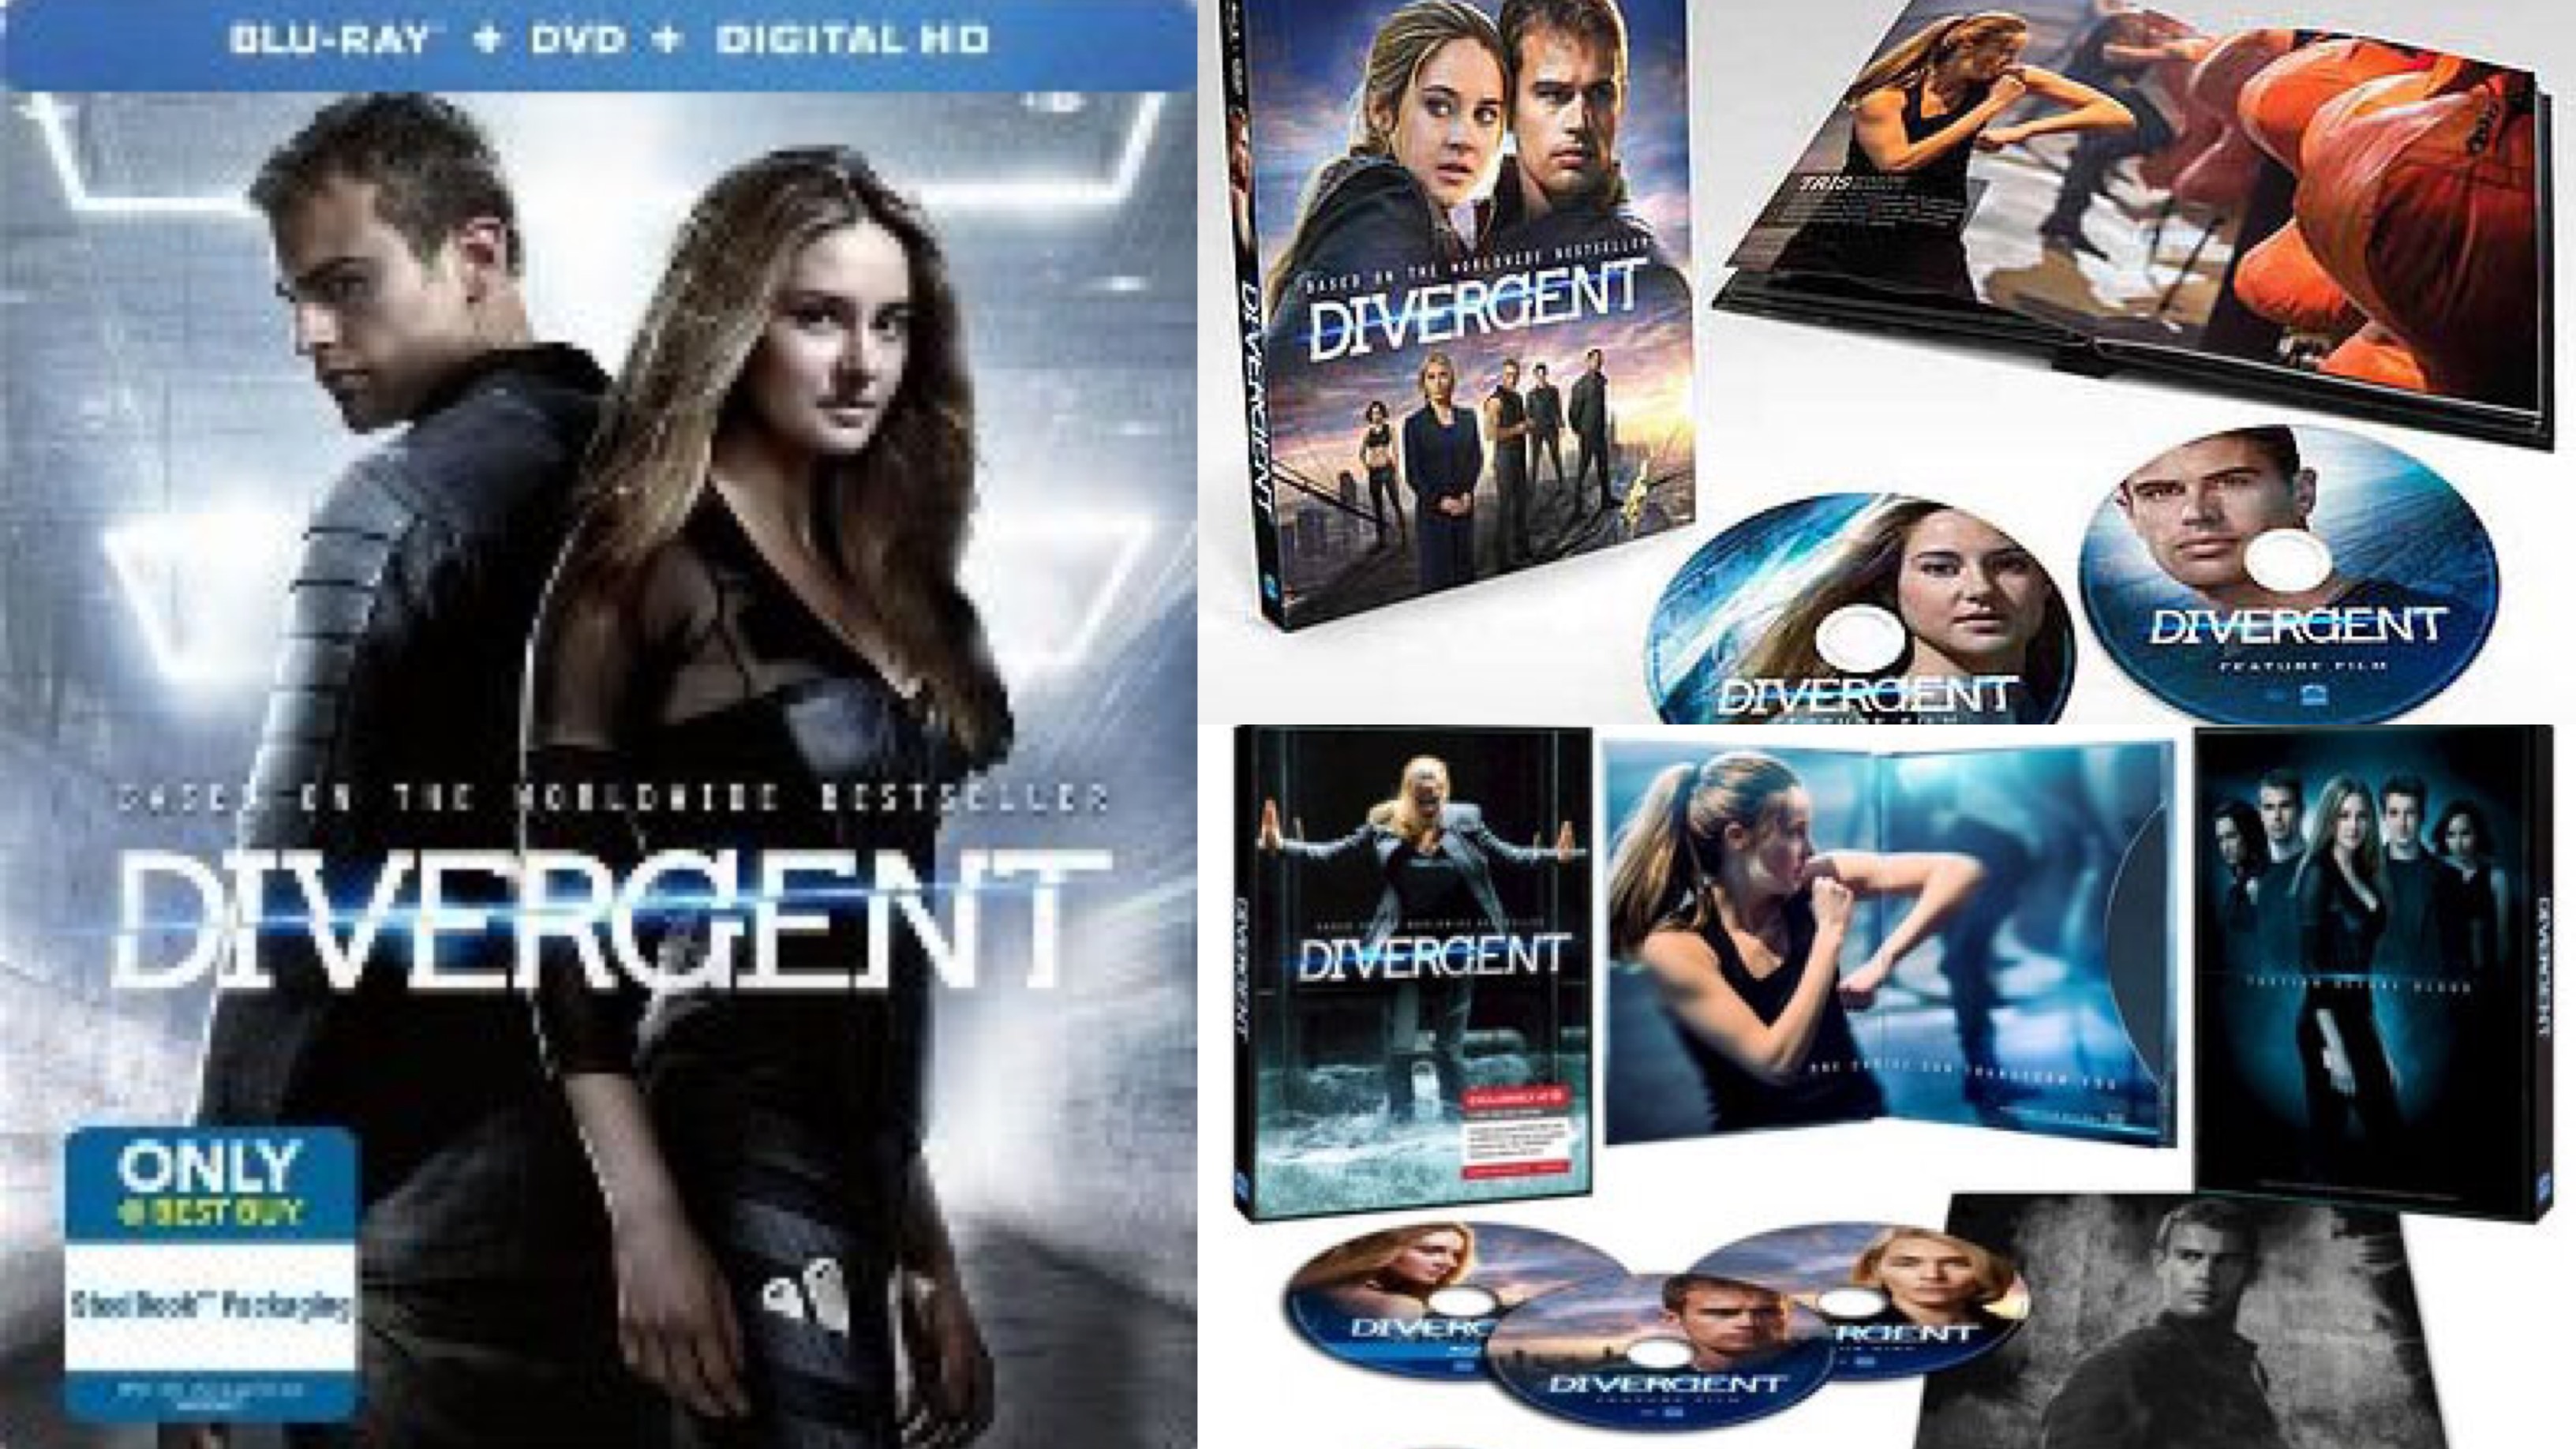 ‘Divergent’ Tops BluRay Sales